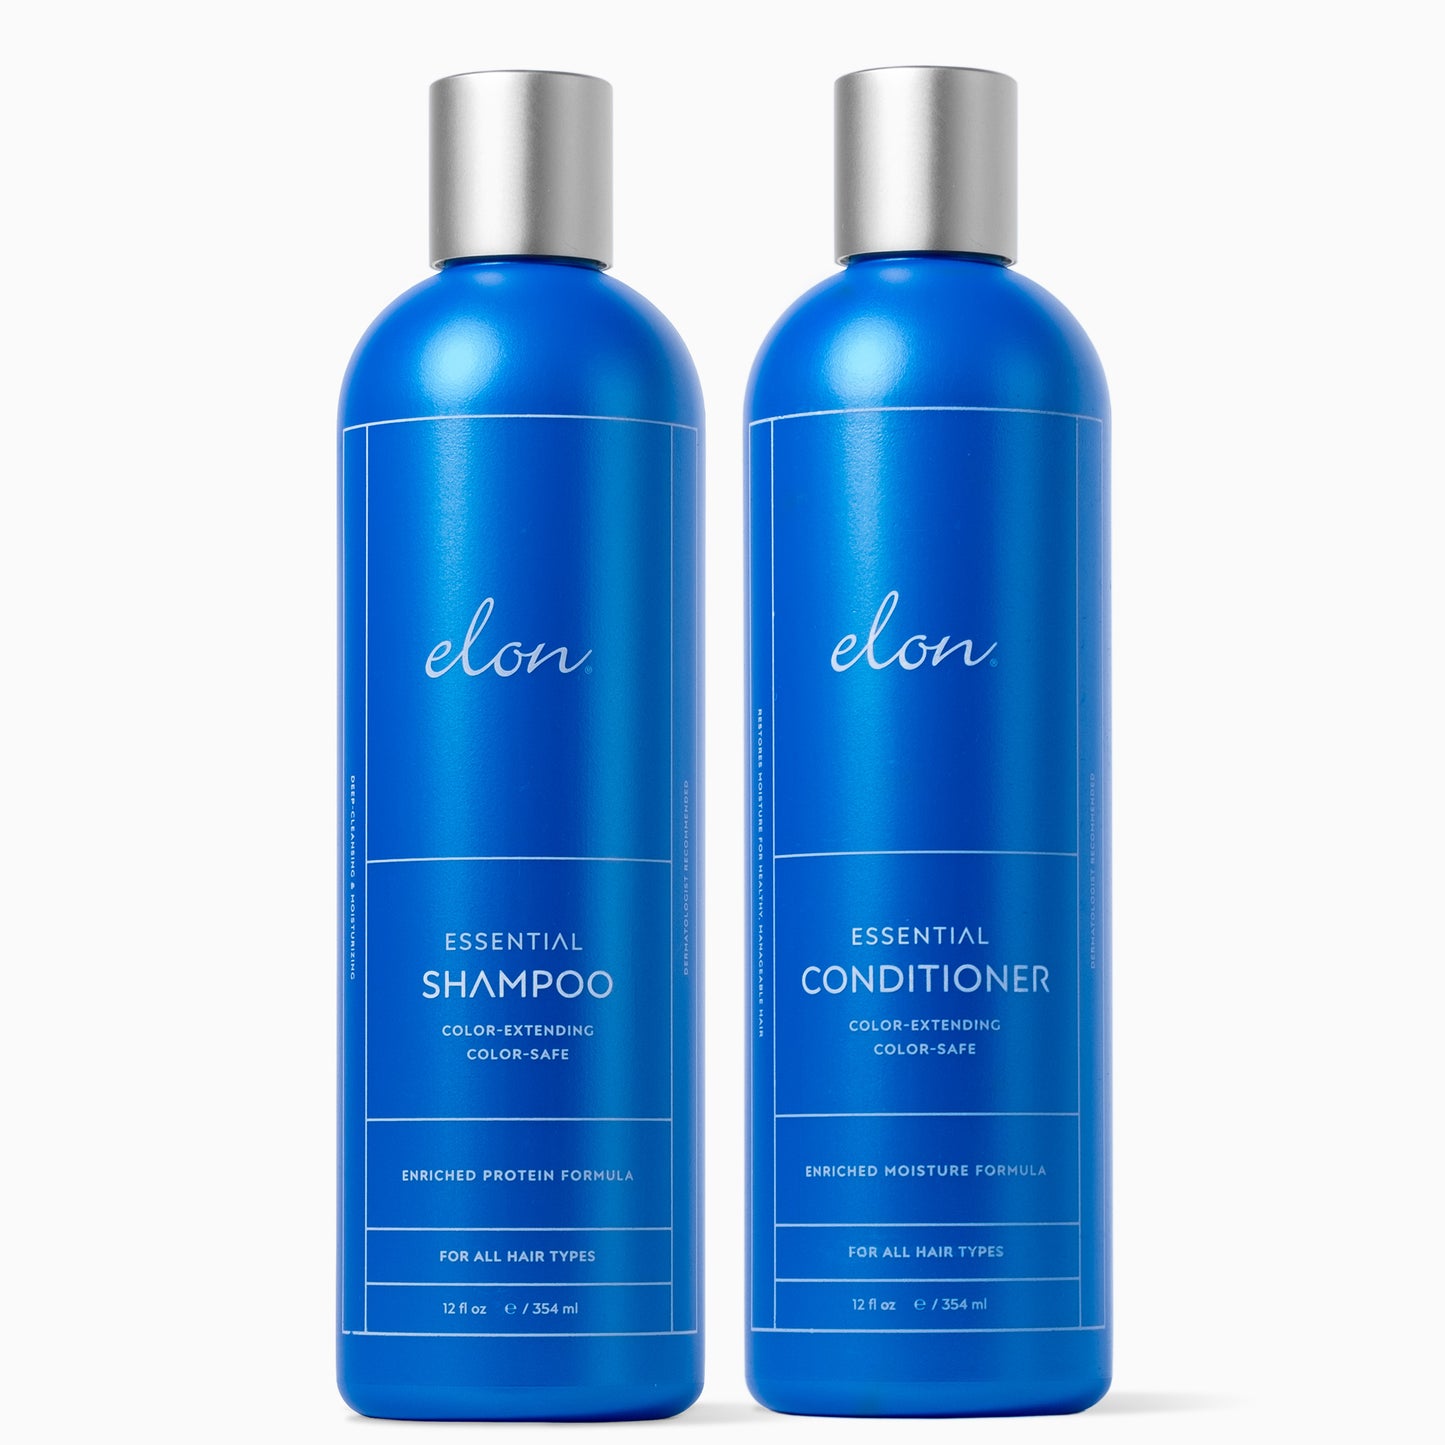 Elon Shampoo & Conditioner Package